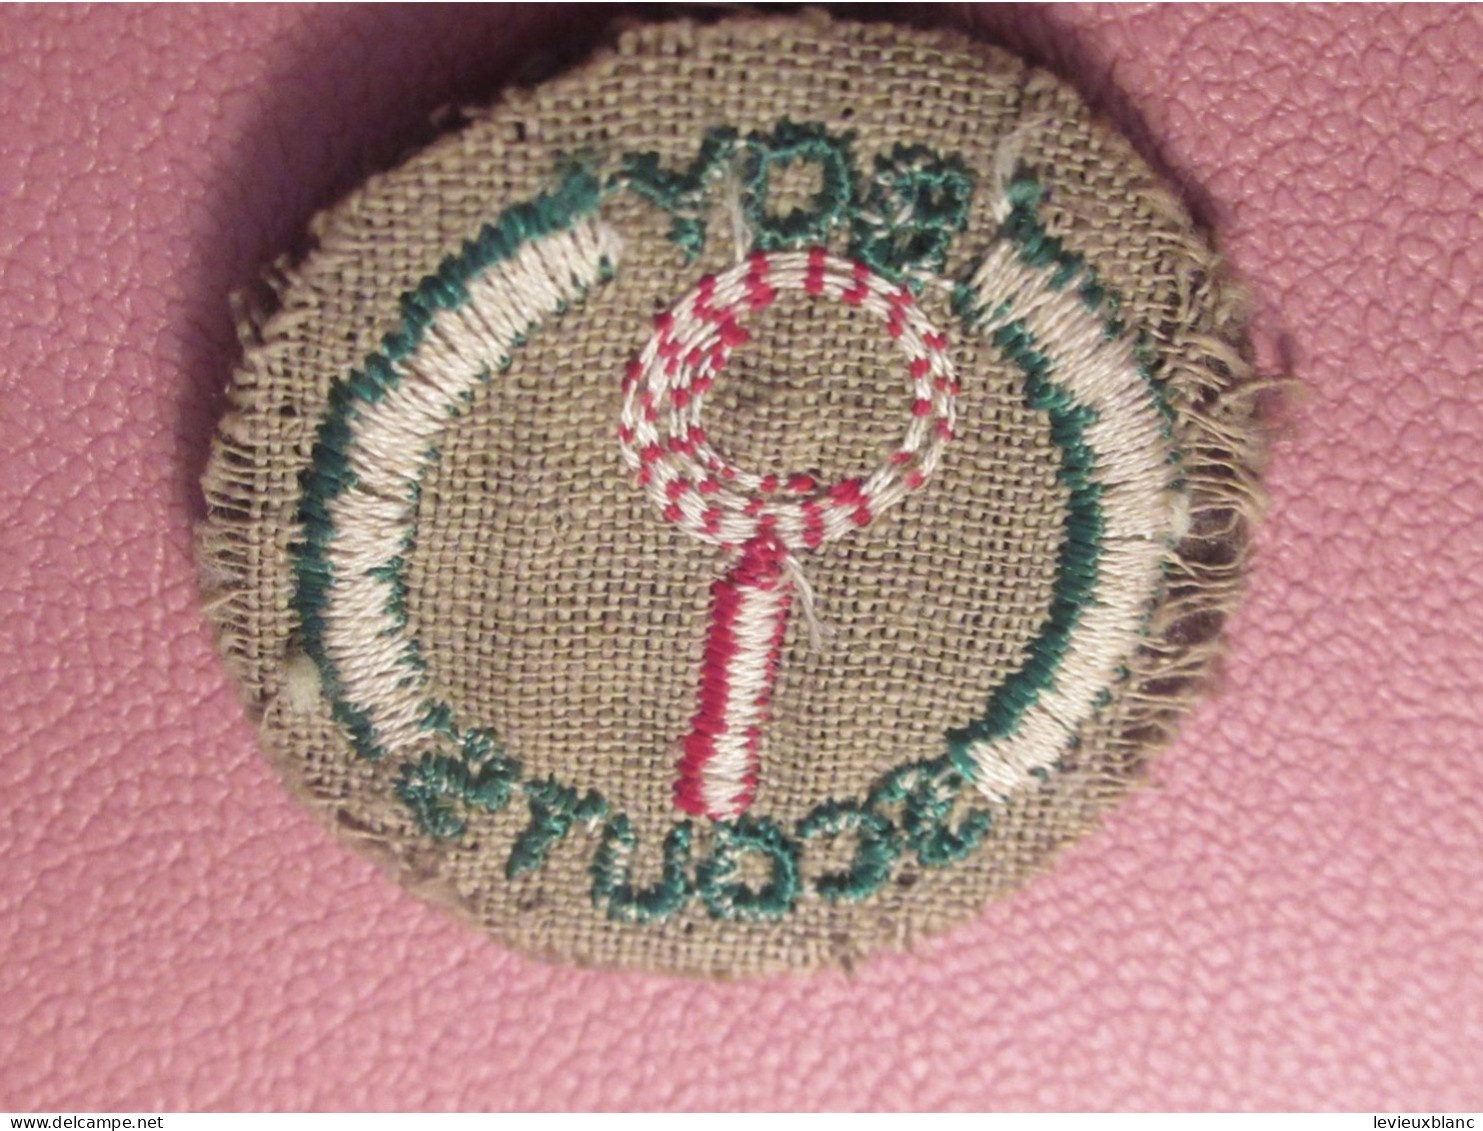 Scoutisme Canada/ Ecusson  Tissu/ Insigne De Mérite/Loupe ?  /année 1940-1960                  ET610 - Padvinderij